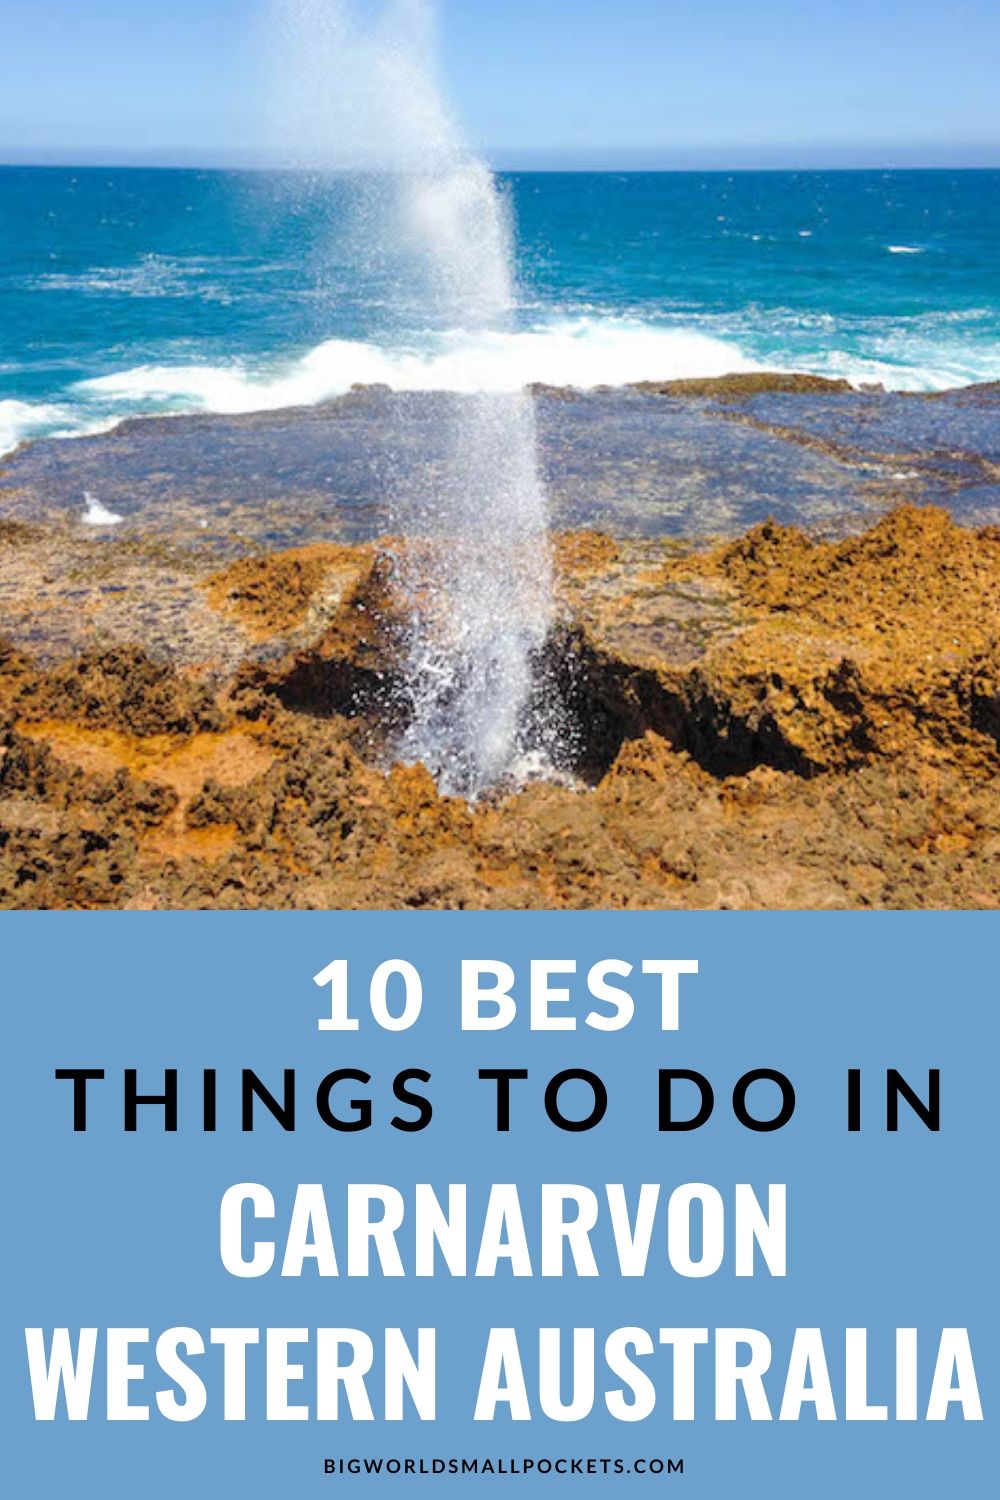 10 Best Things To Do in Carnarvon, Western Australia